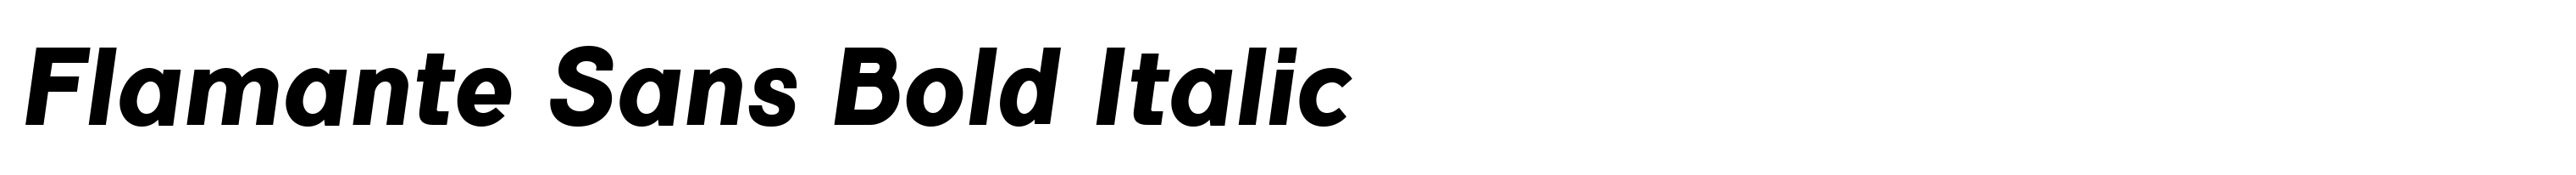 Flamante Sans Bold Italic